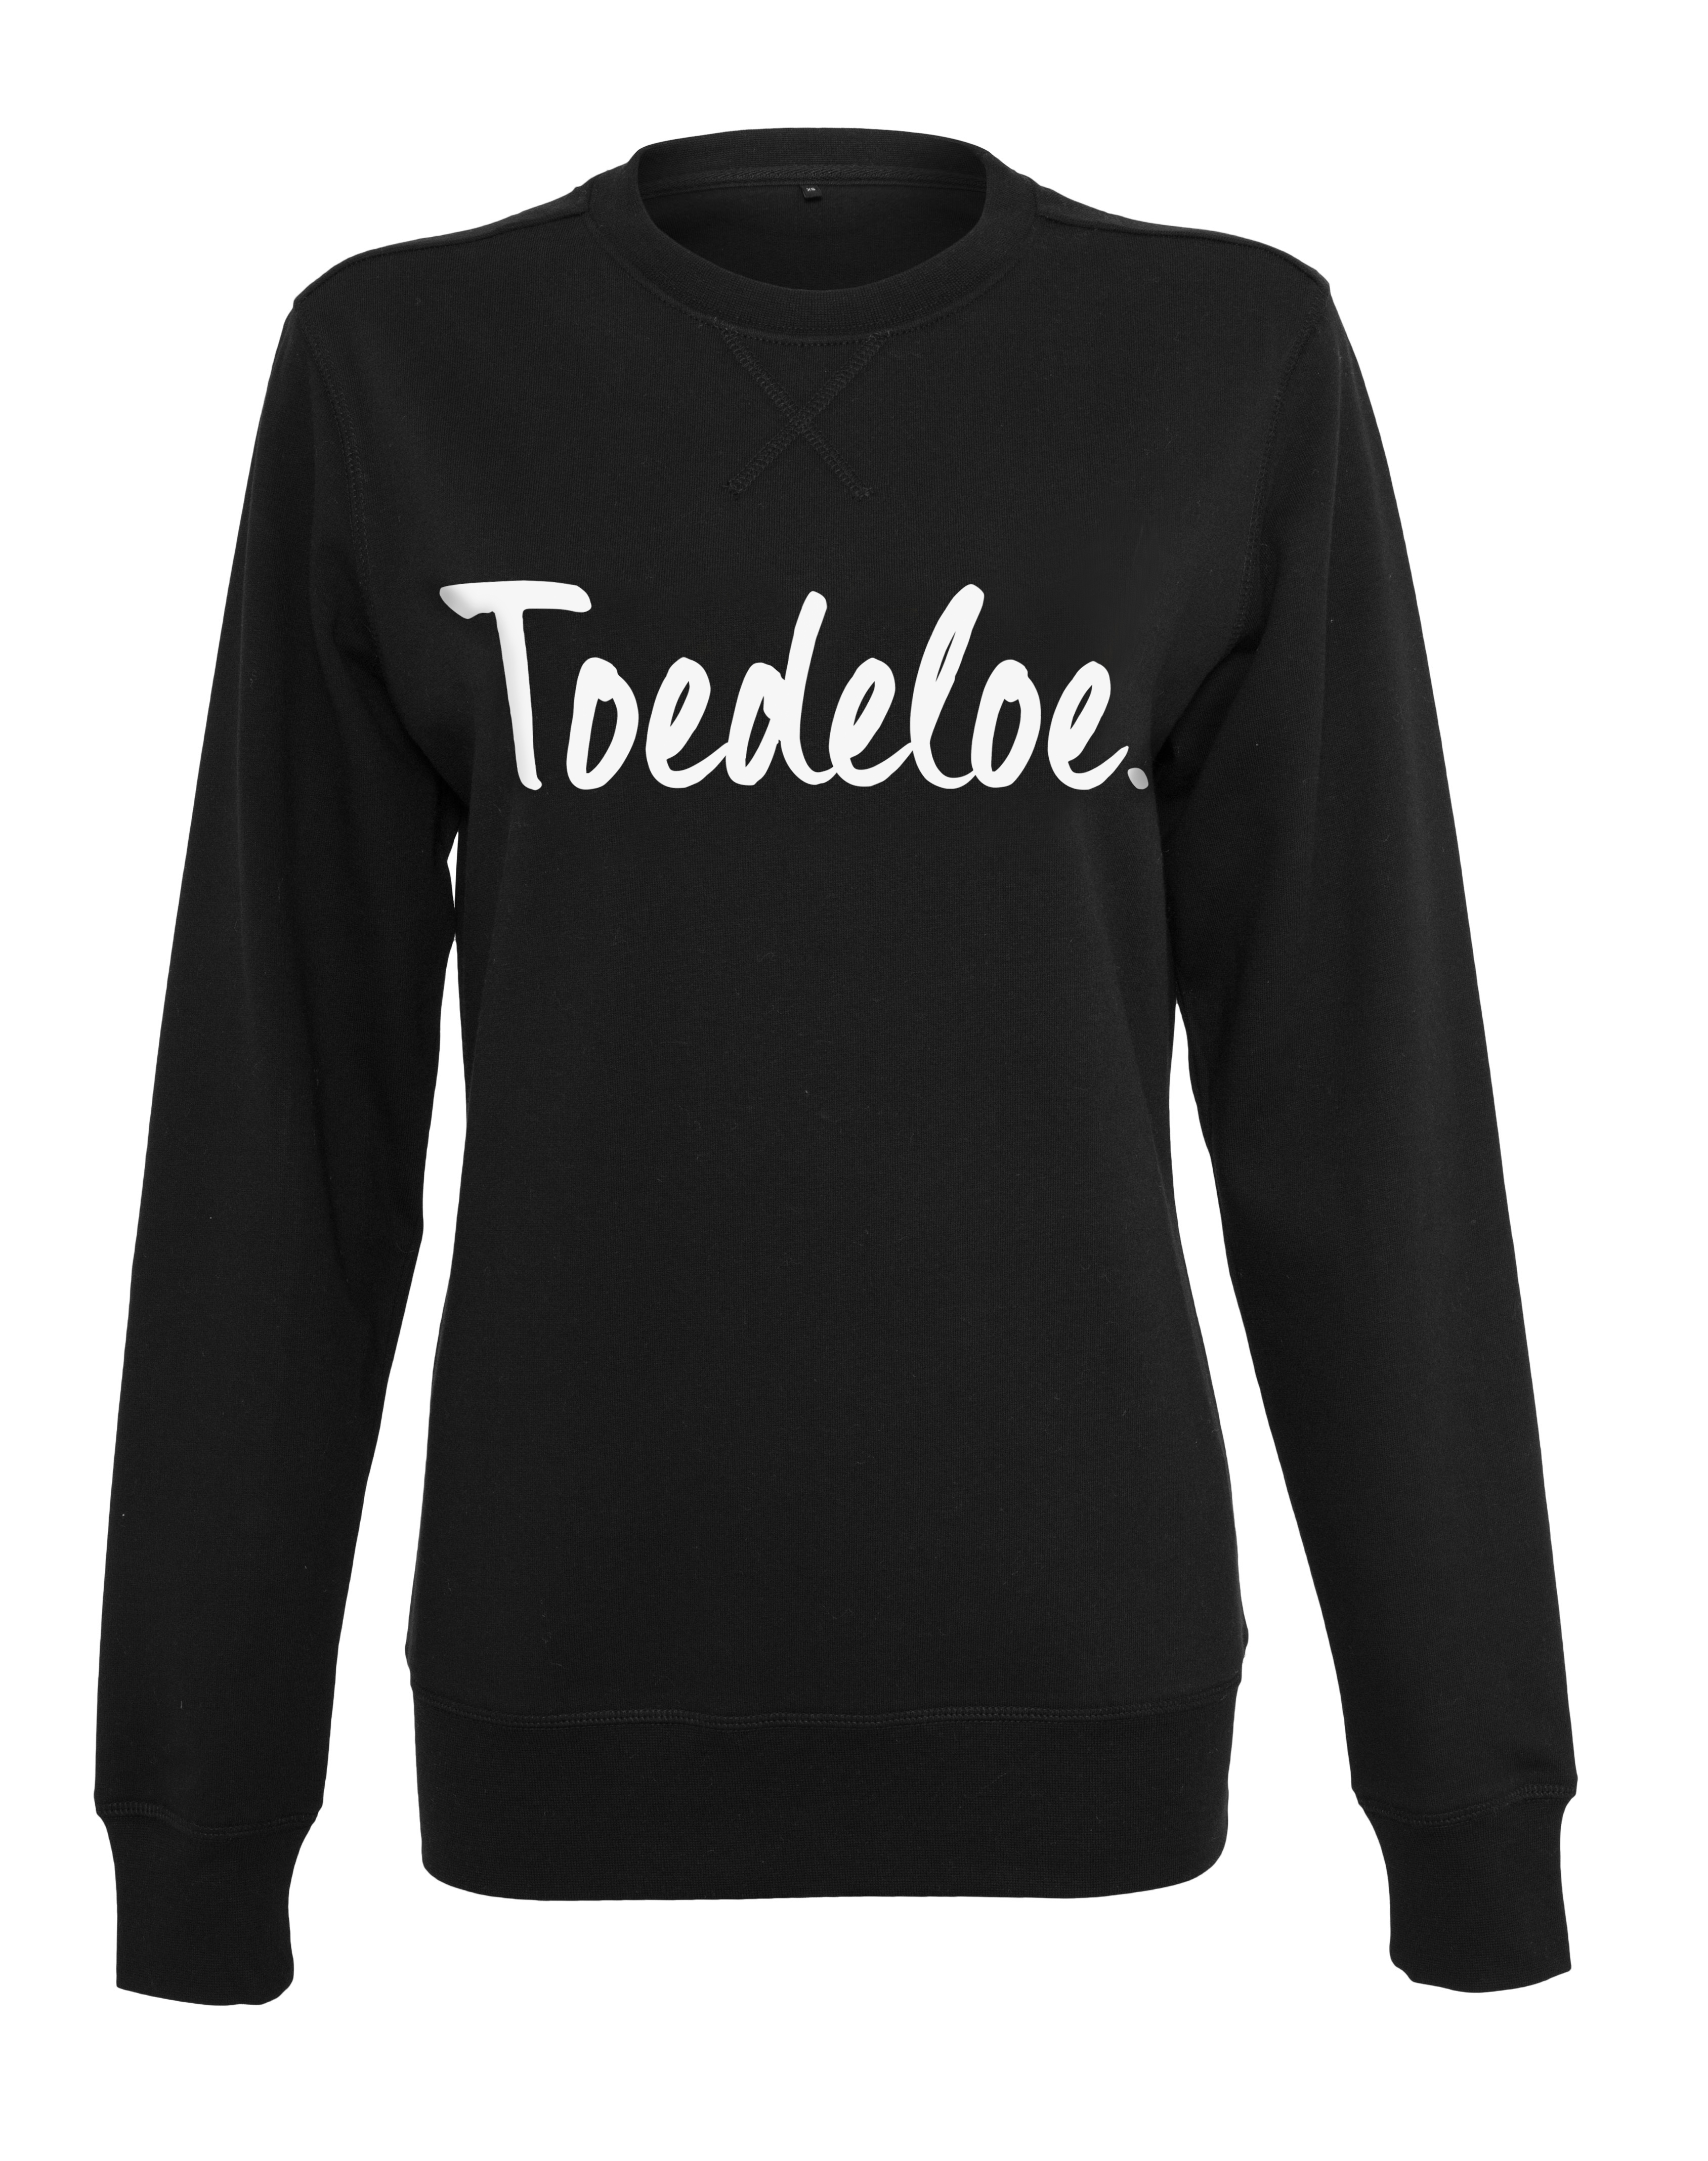 Afscheid salaris Acteur Dames Sweater zwart Toedeloe - Badass Fashion